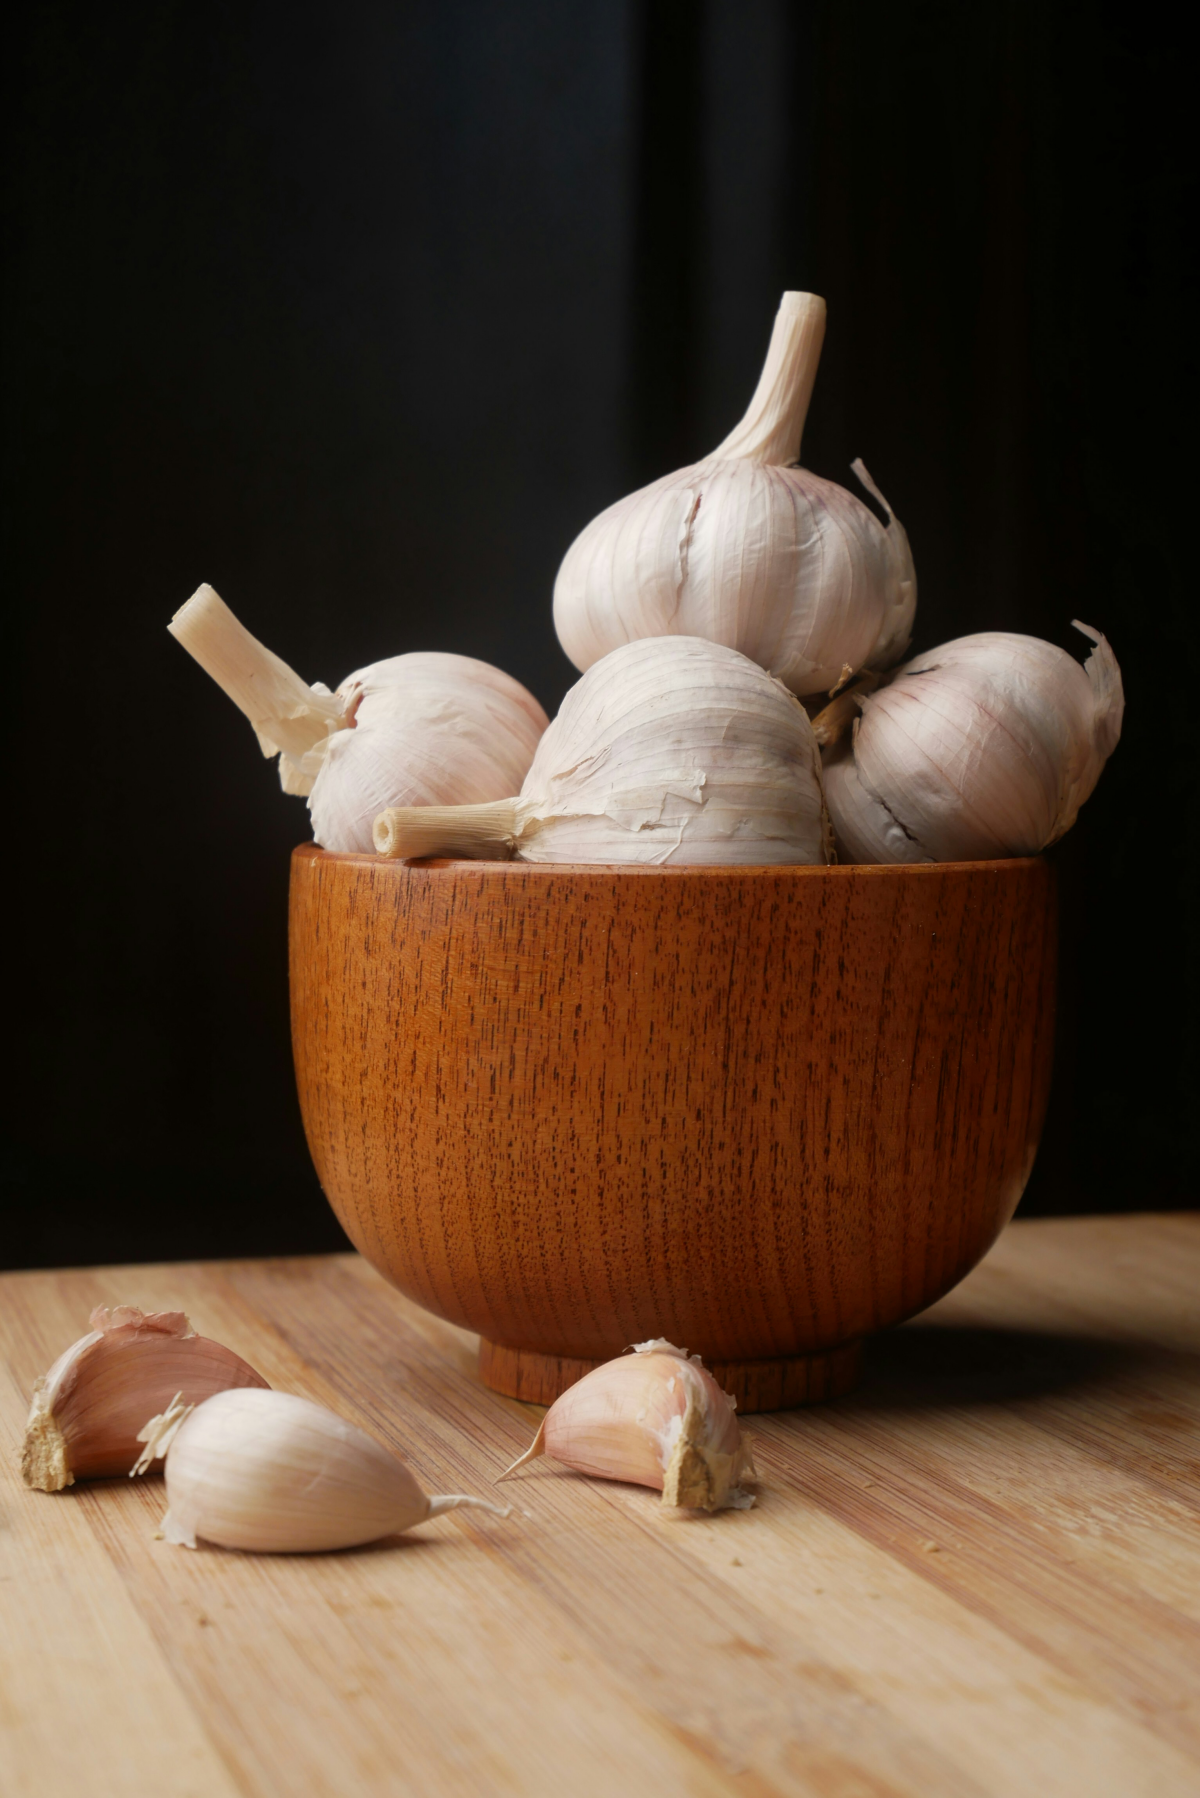 tick spray for yard garlic in a wooden bowl